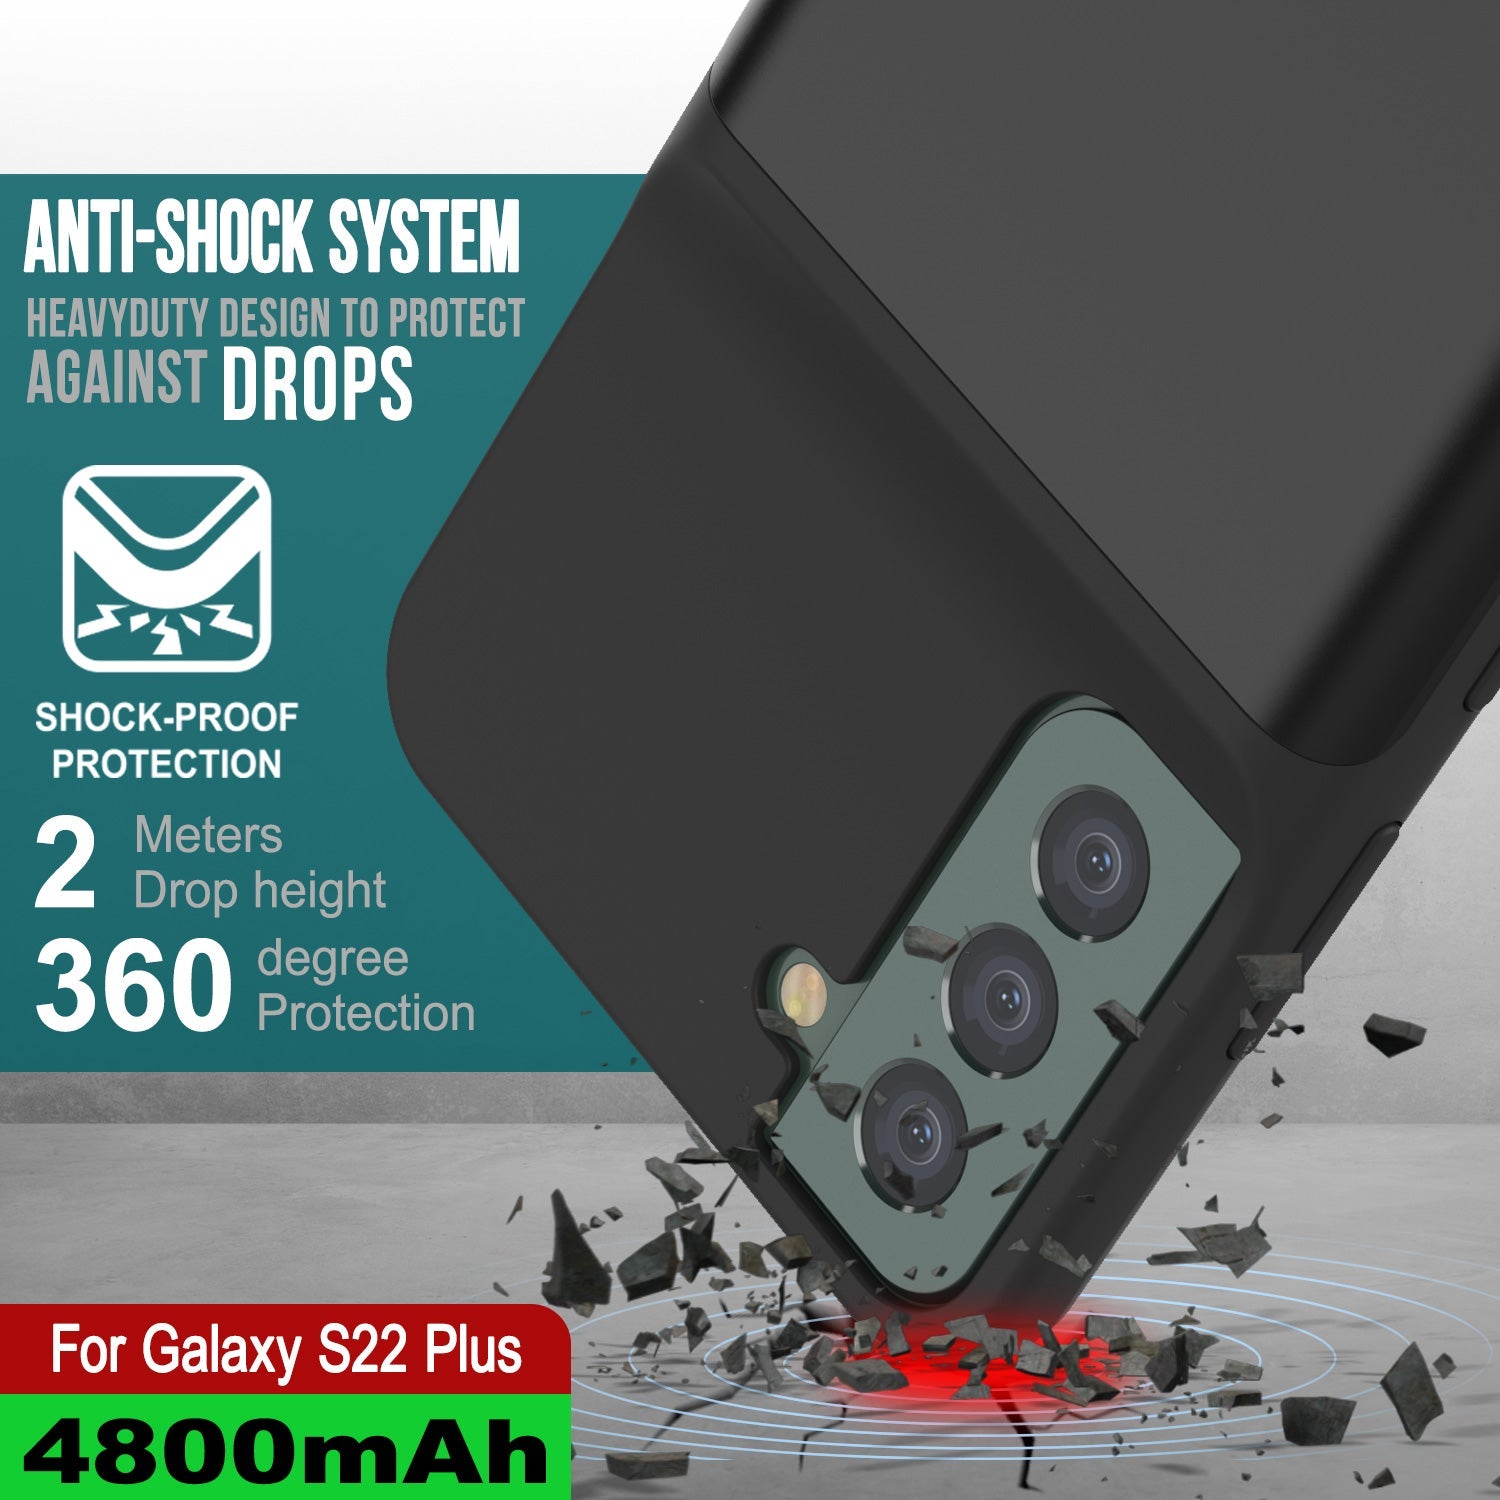 PunkJuice S22+ Plus Battery Case Black - Portable Charging Power Juice Bank with 4800mAh